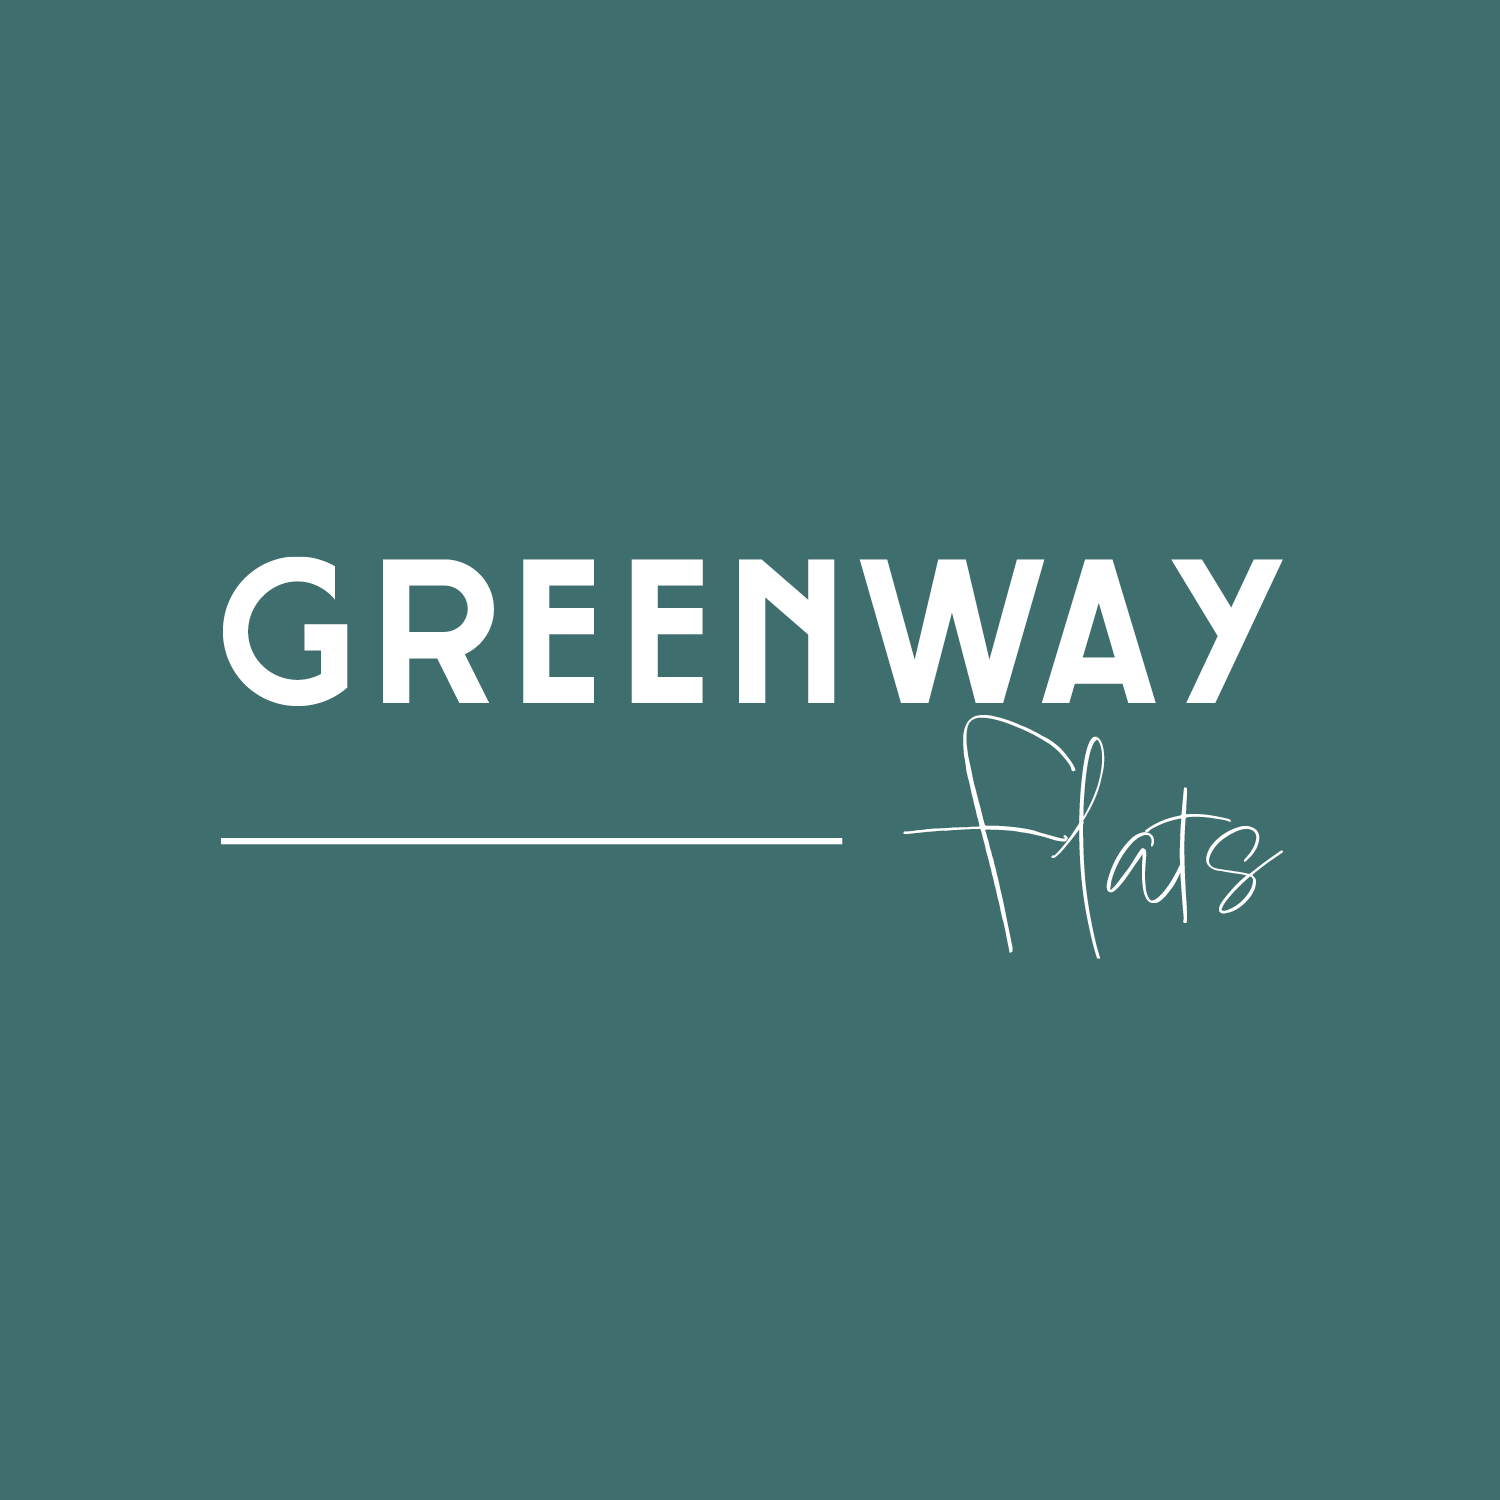 Greenway Flats